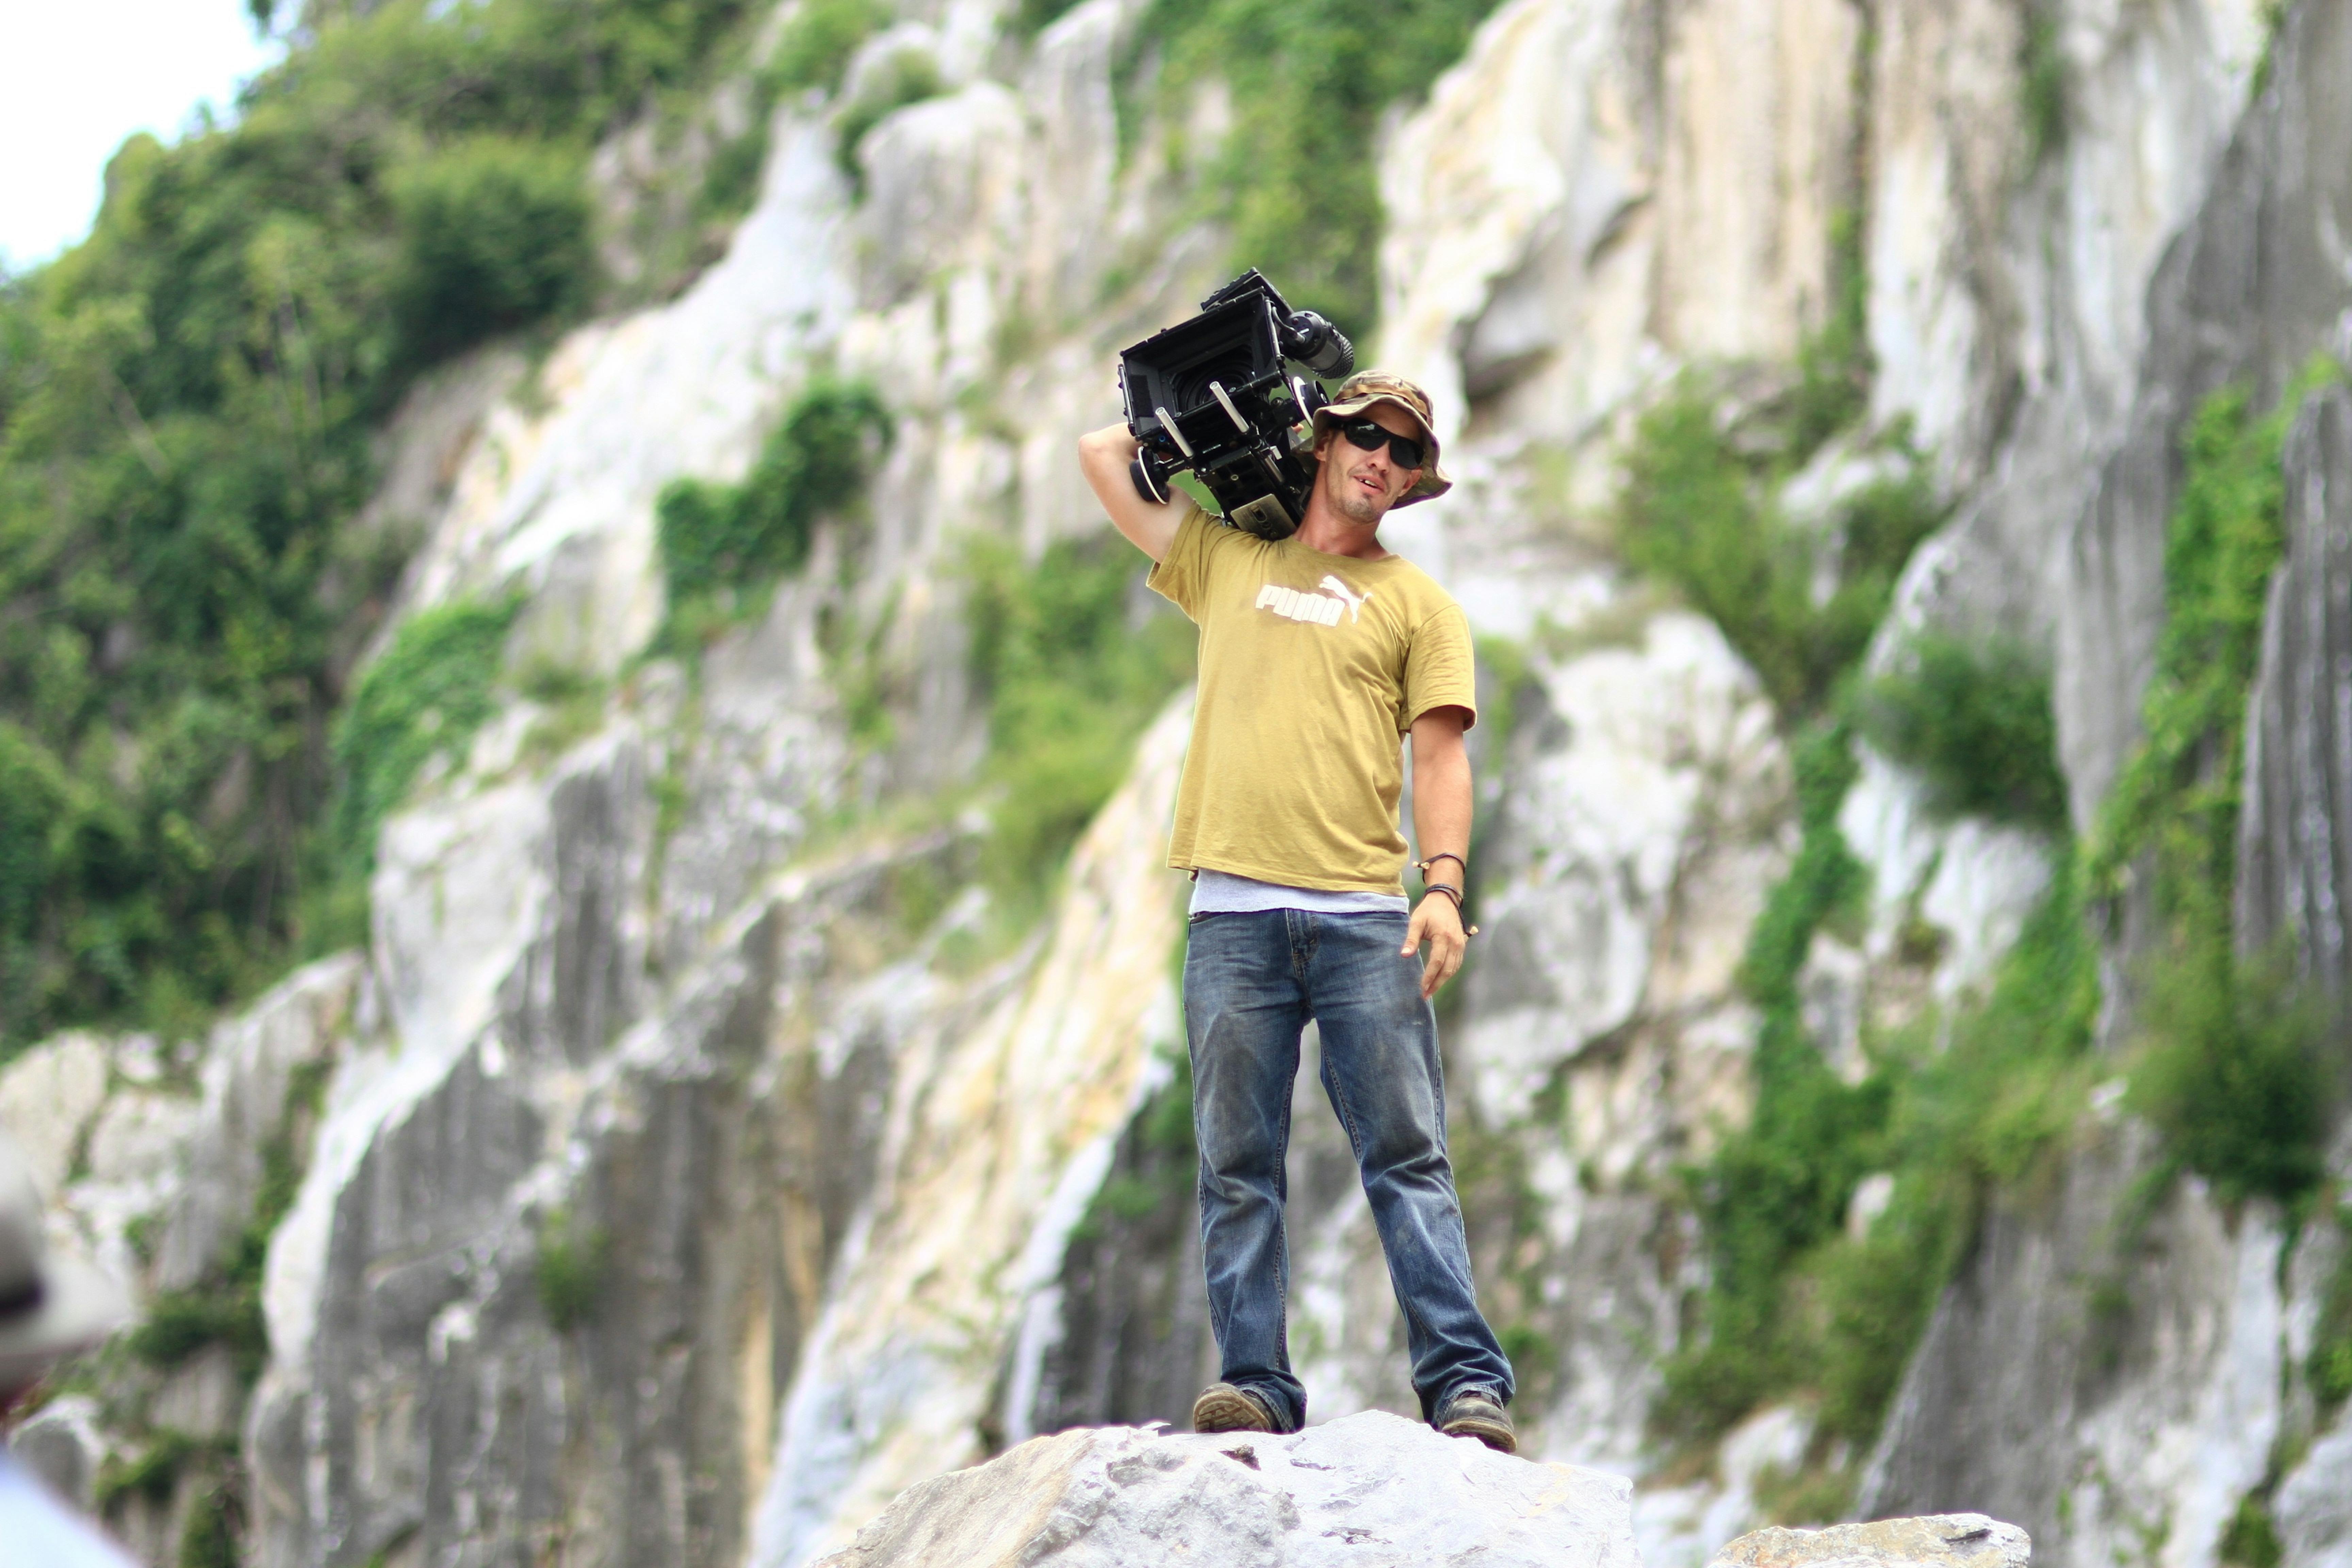 Fortunato "Forchy" Ruberto shares how cameramen shoot some extraordinary shots